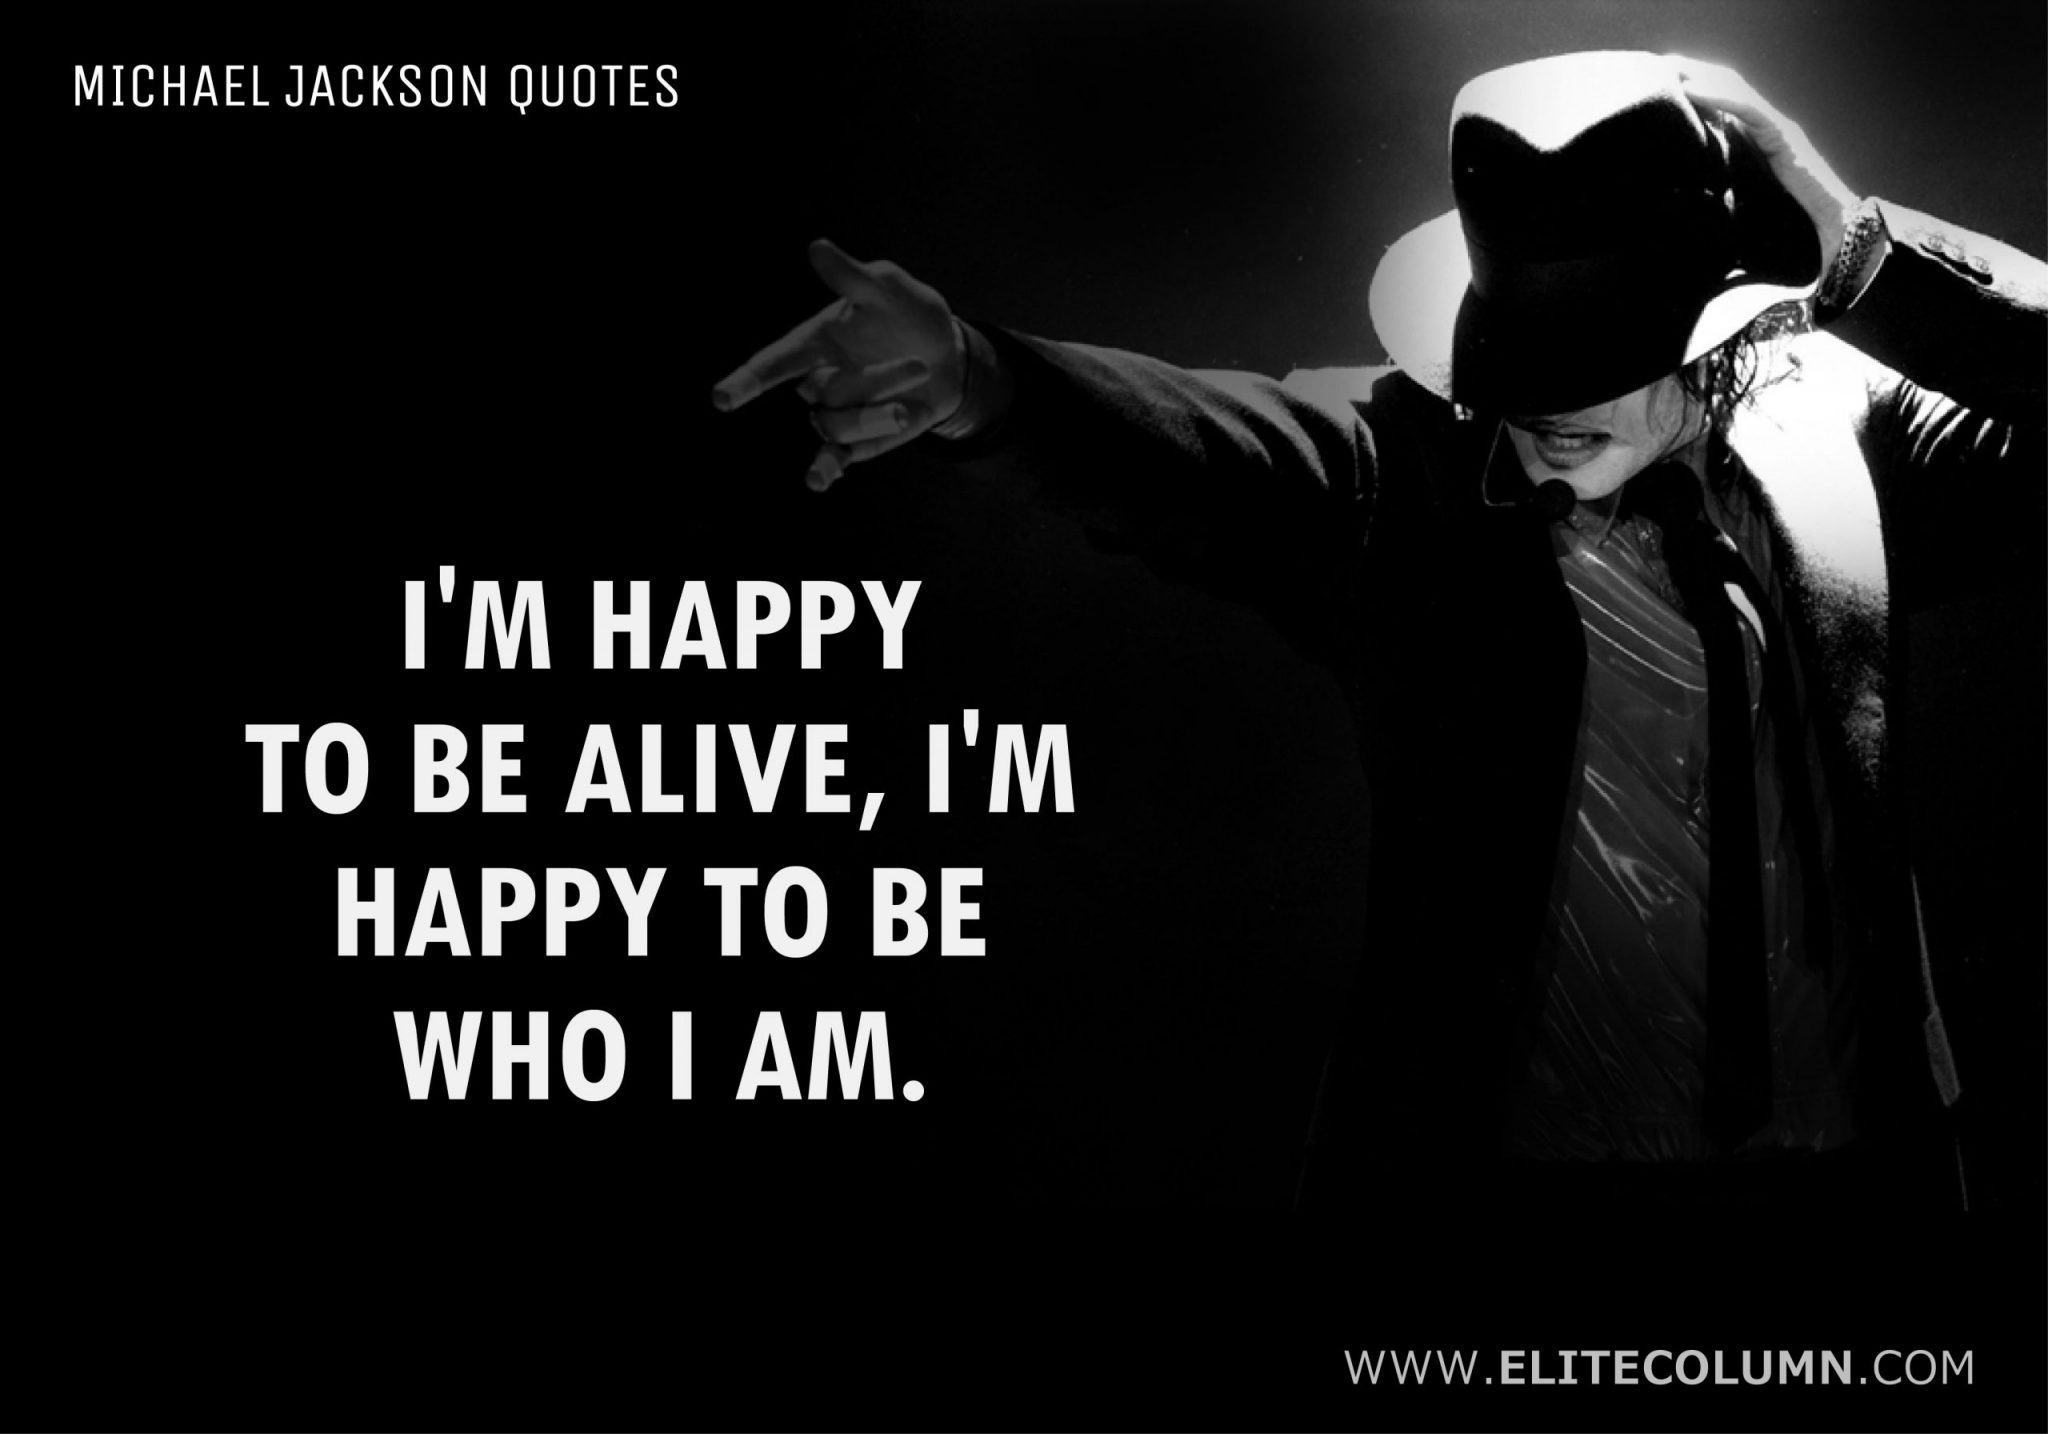 Top 27 Most Inspiring Michael Jackson Quotes - Goalcast